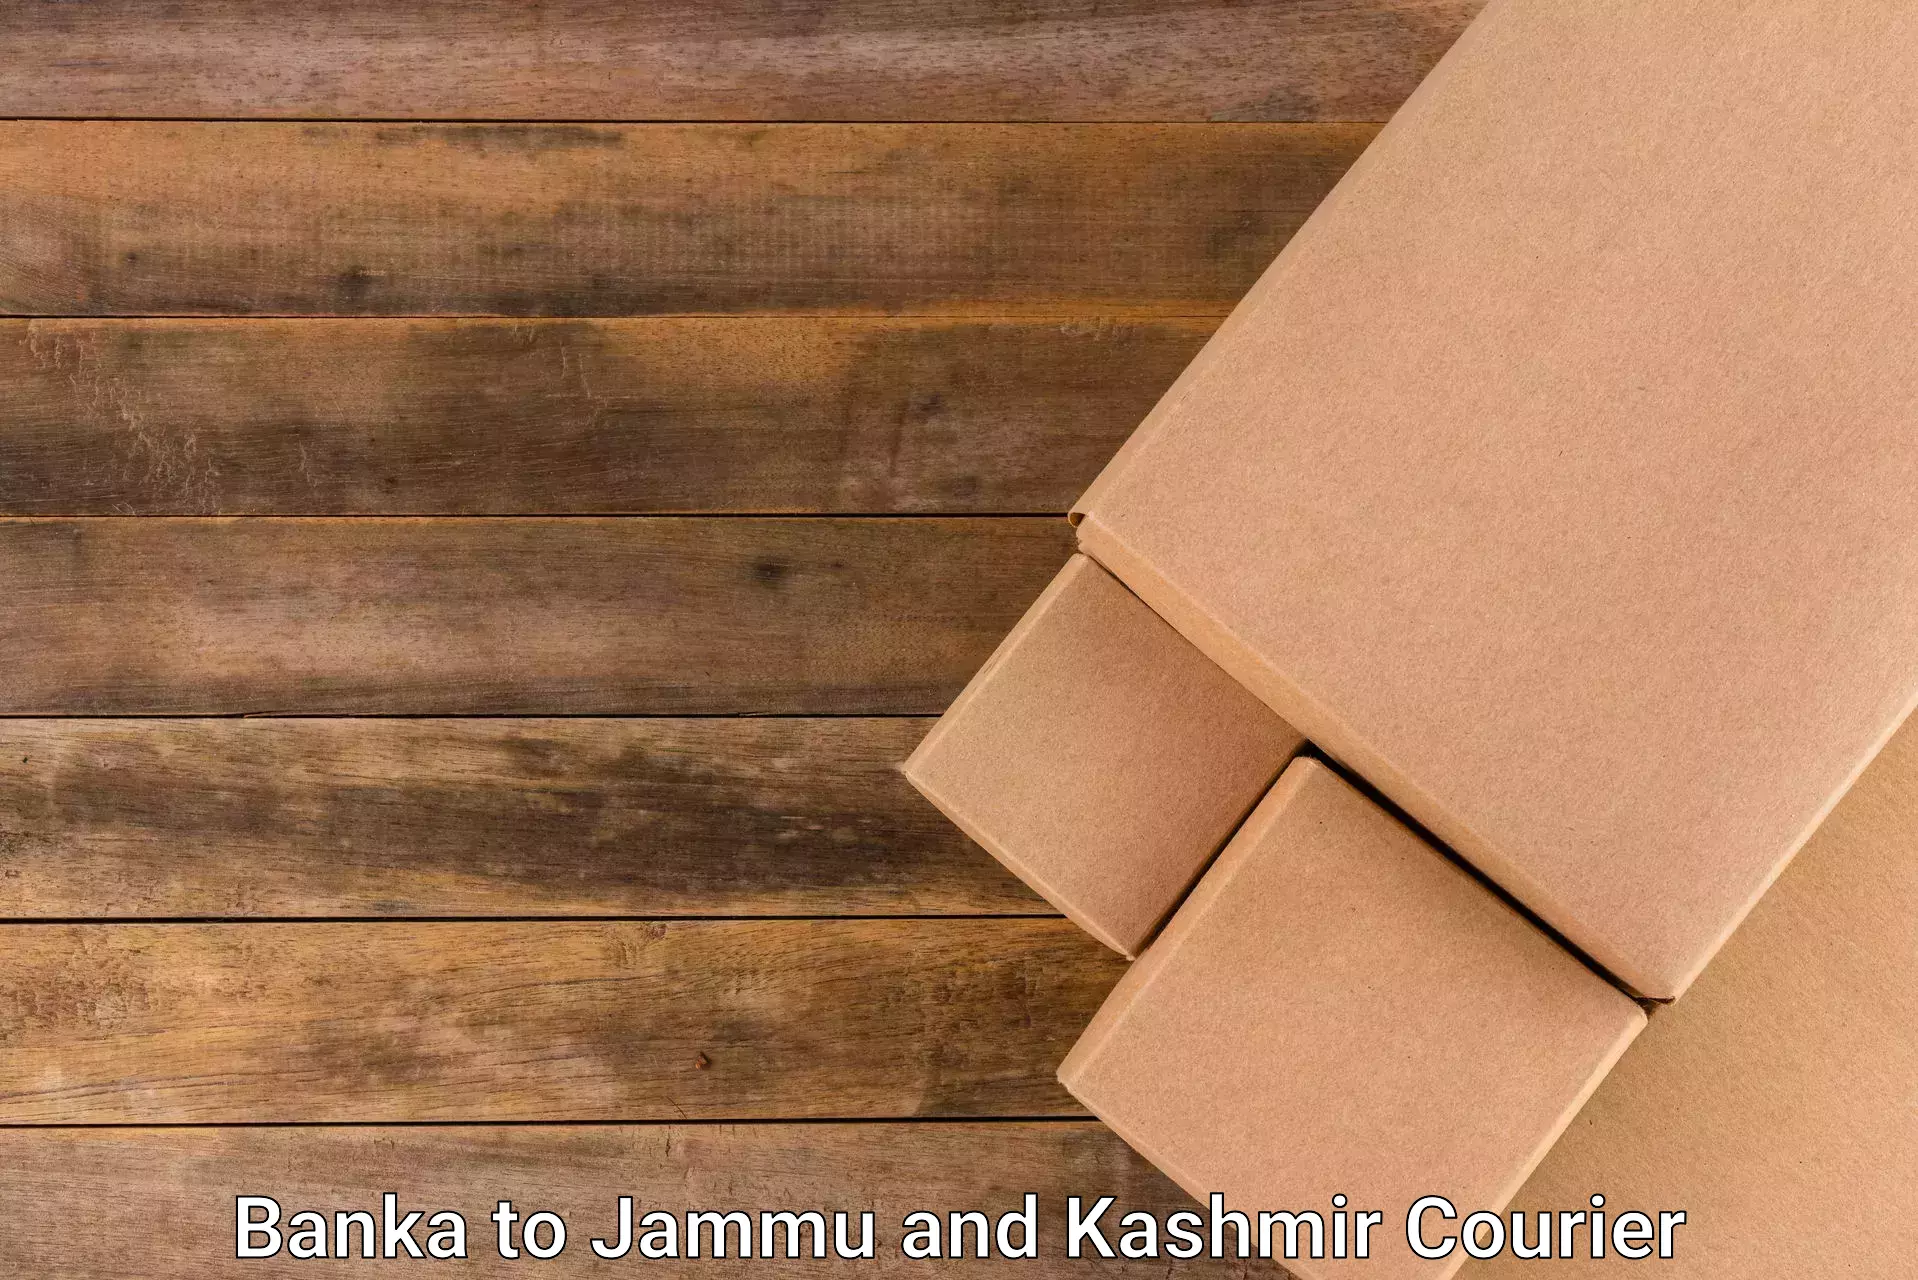 Urban courier service Banka to Jammu and Kashmir